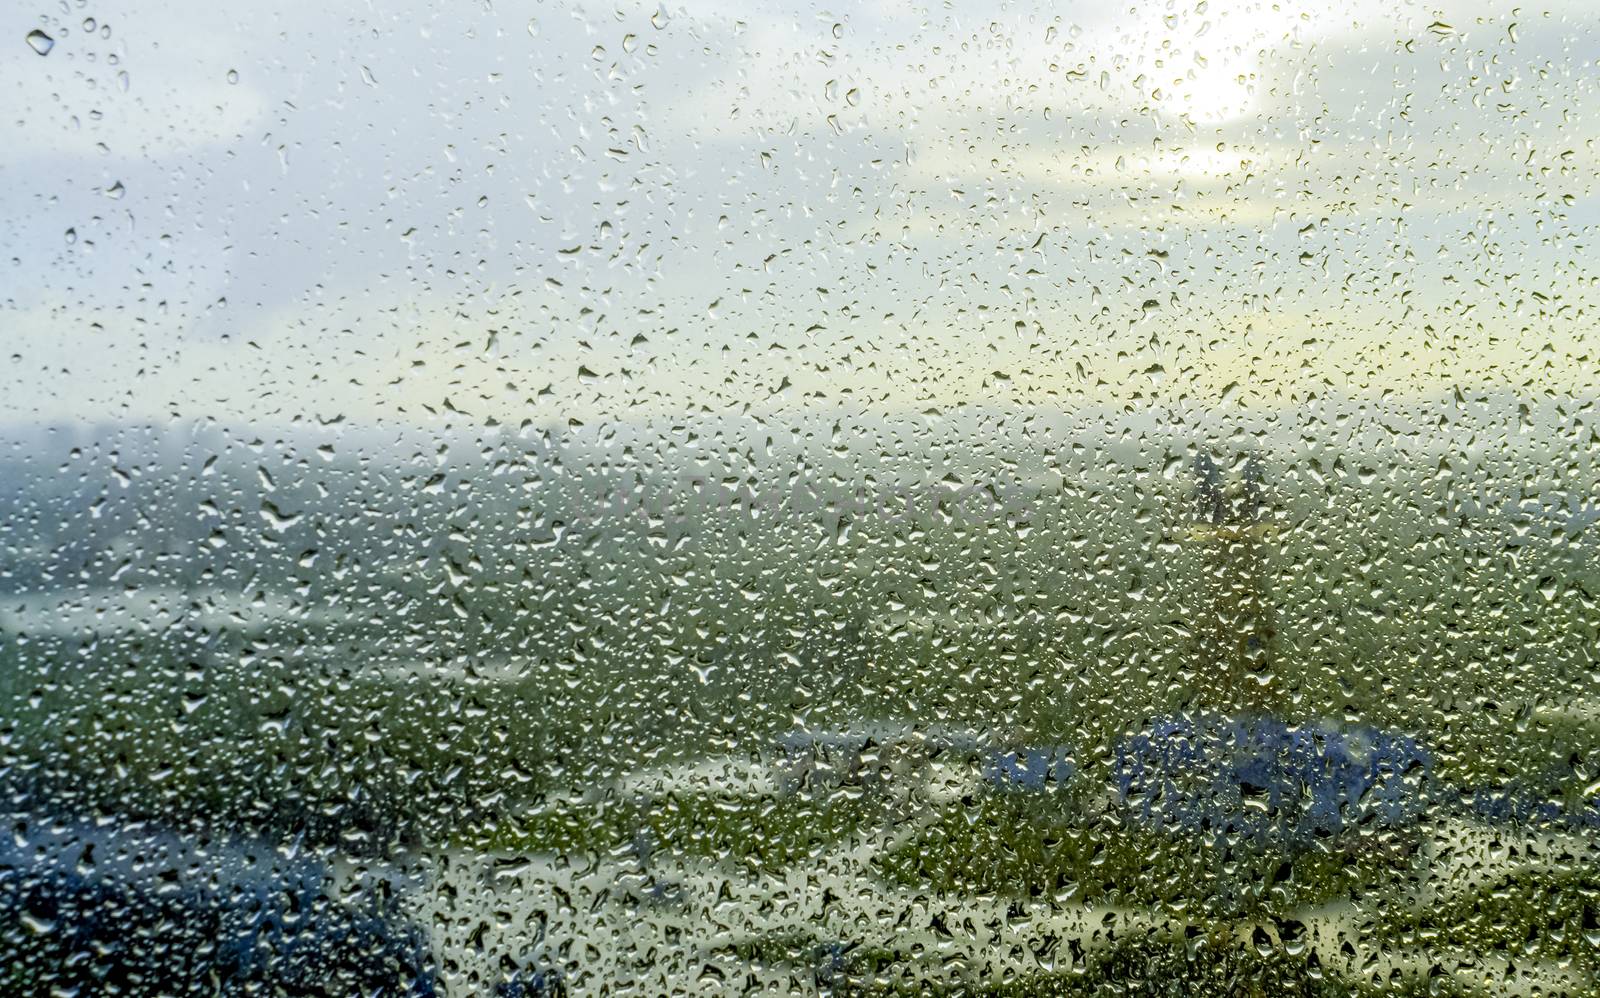 rainy window, the autumn rain water drops on glass